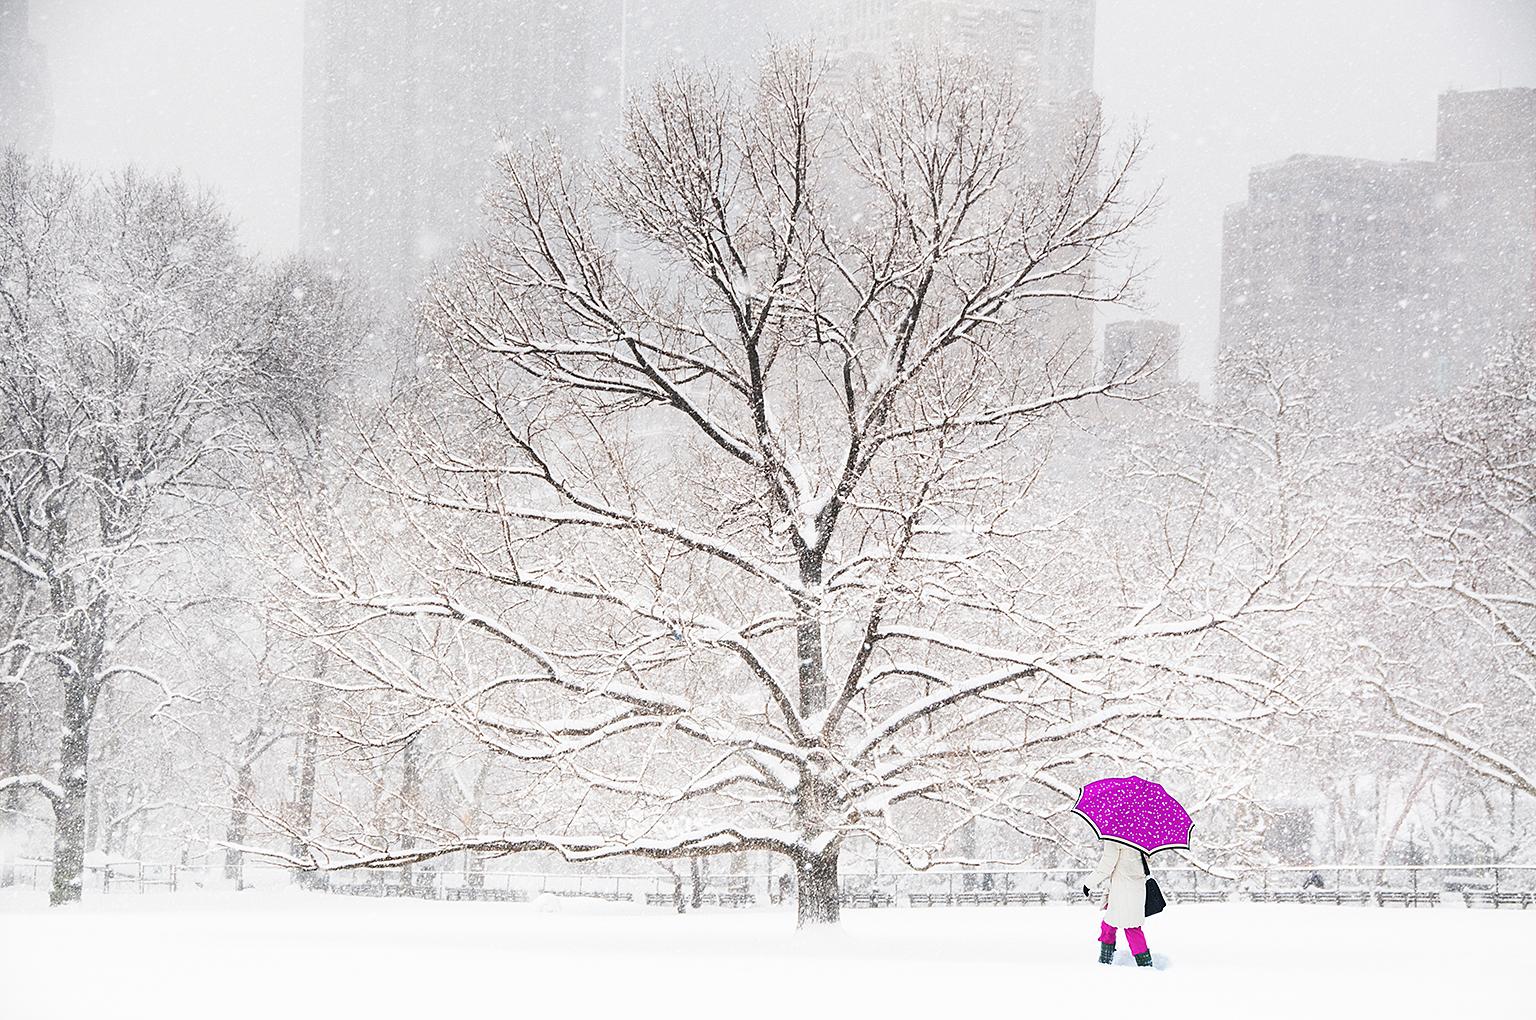 Mitchell Funk Landscape Photograph - Central Park: Umbrella in the snow